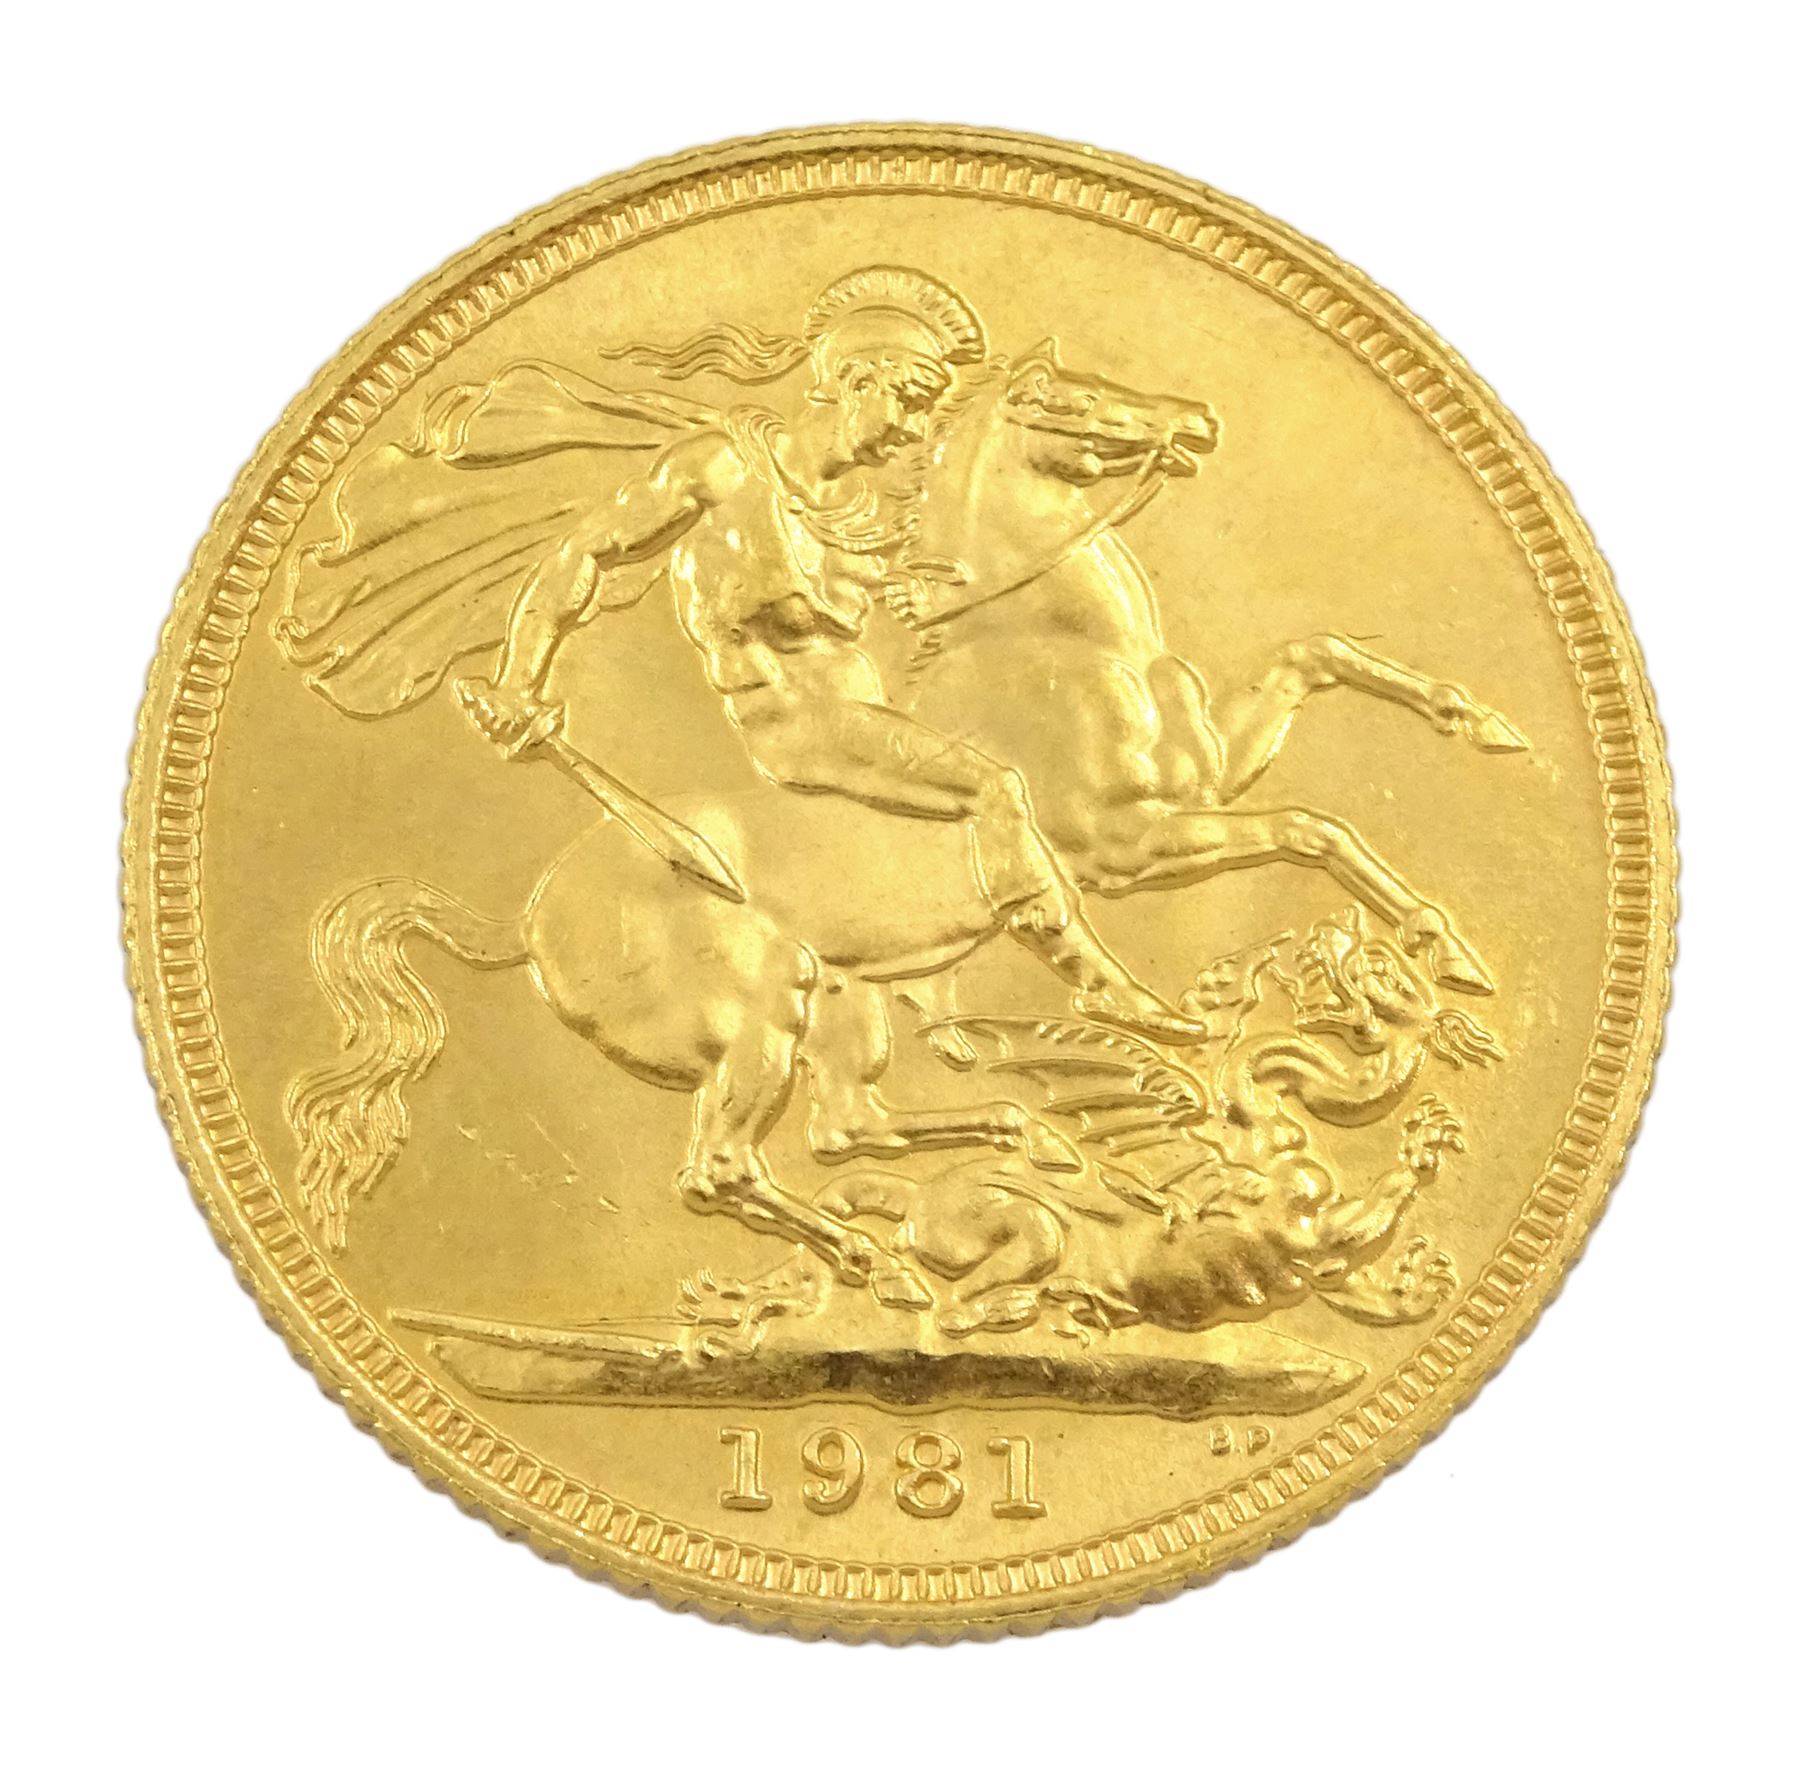 Queen Elizabeth II 1981 gold full sovereign coin - Image 2 of 2